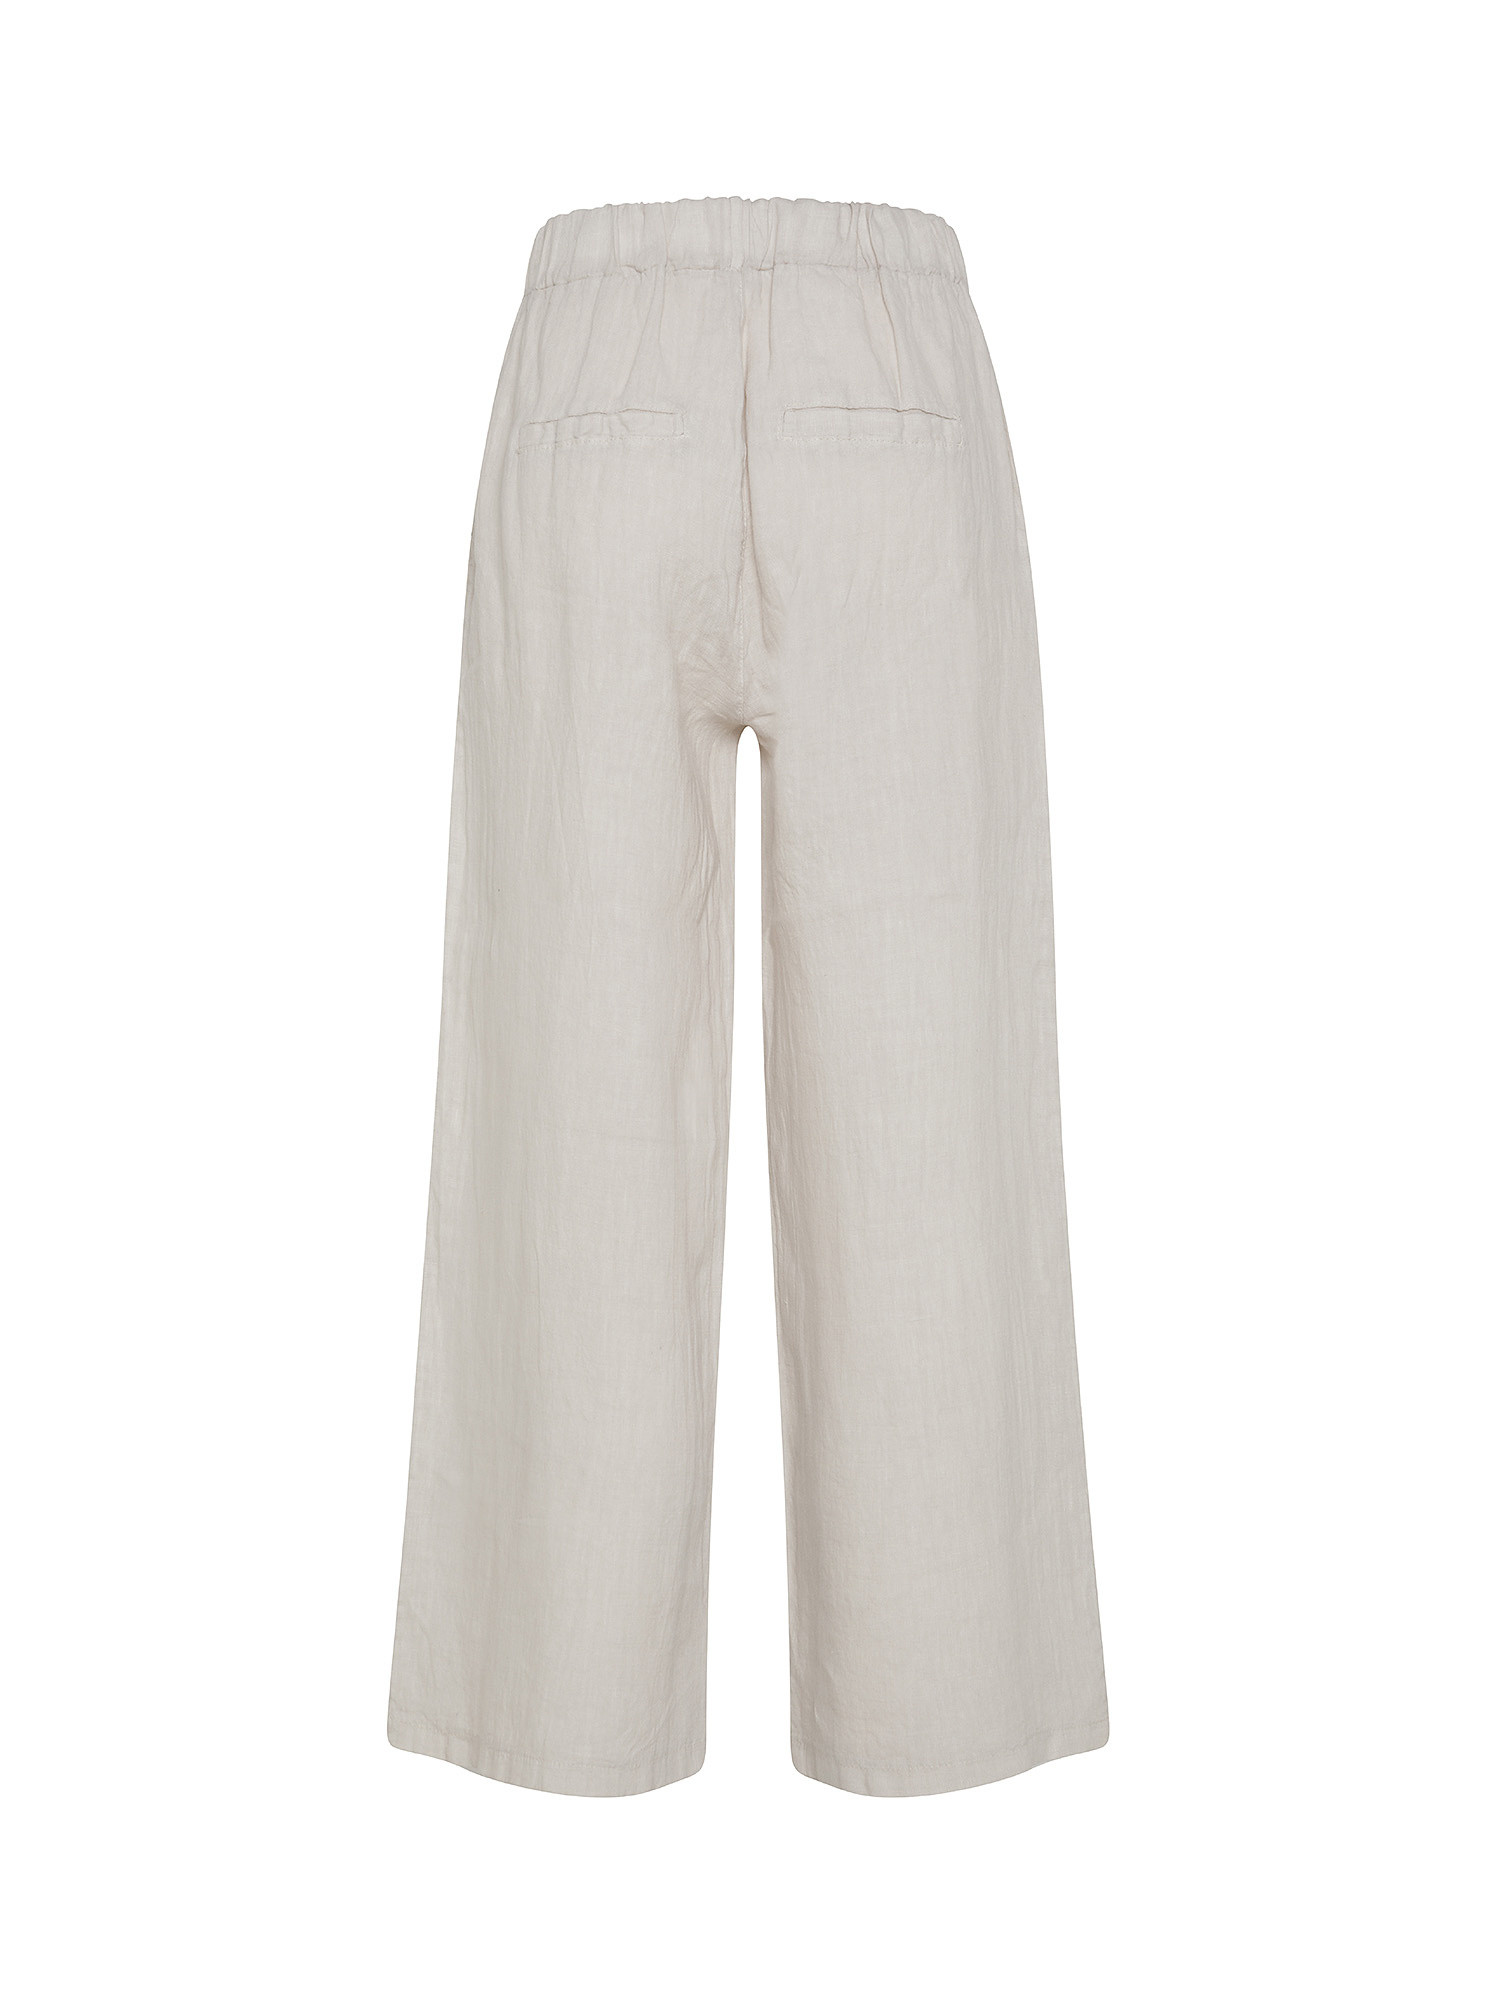 Koan - Wide linen trousers, Beige, large image number 1